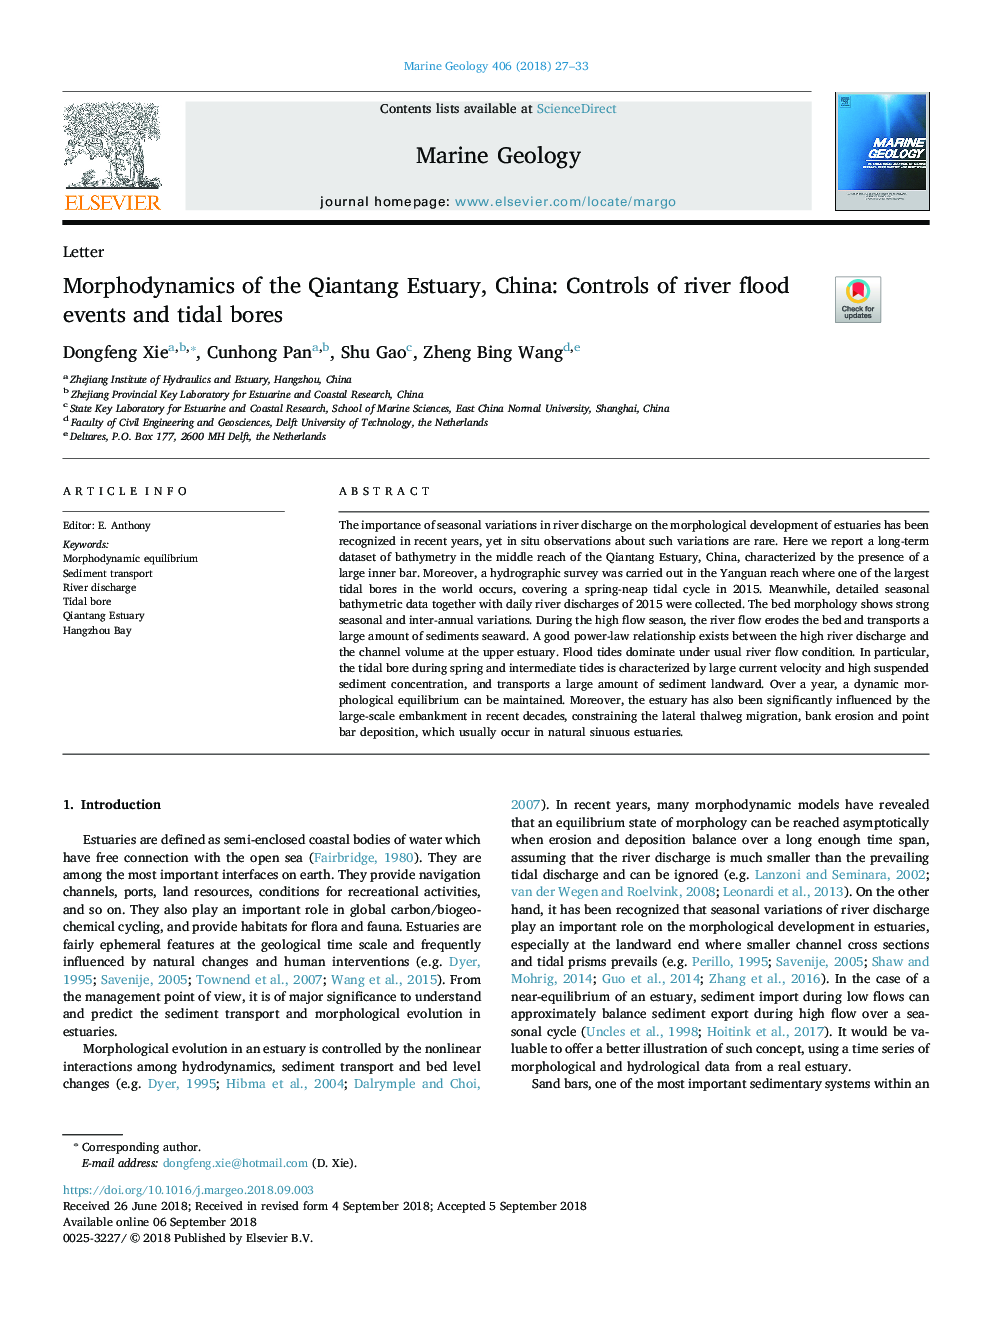 Morphodynamics of the Qiantang Estuary, China: Controls of river flood events and tidal bores